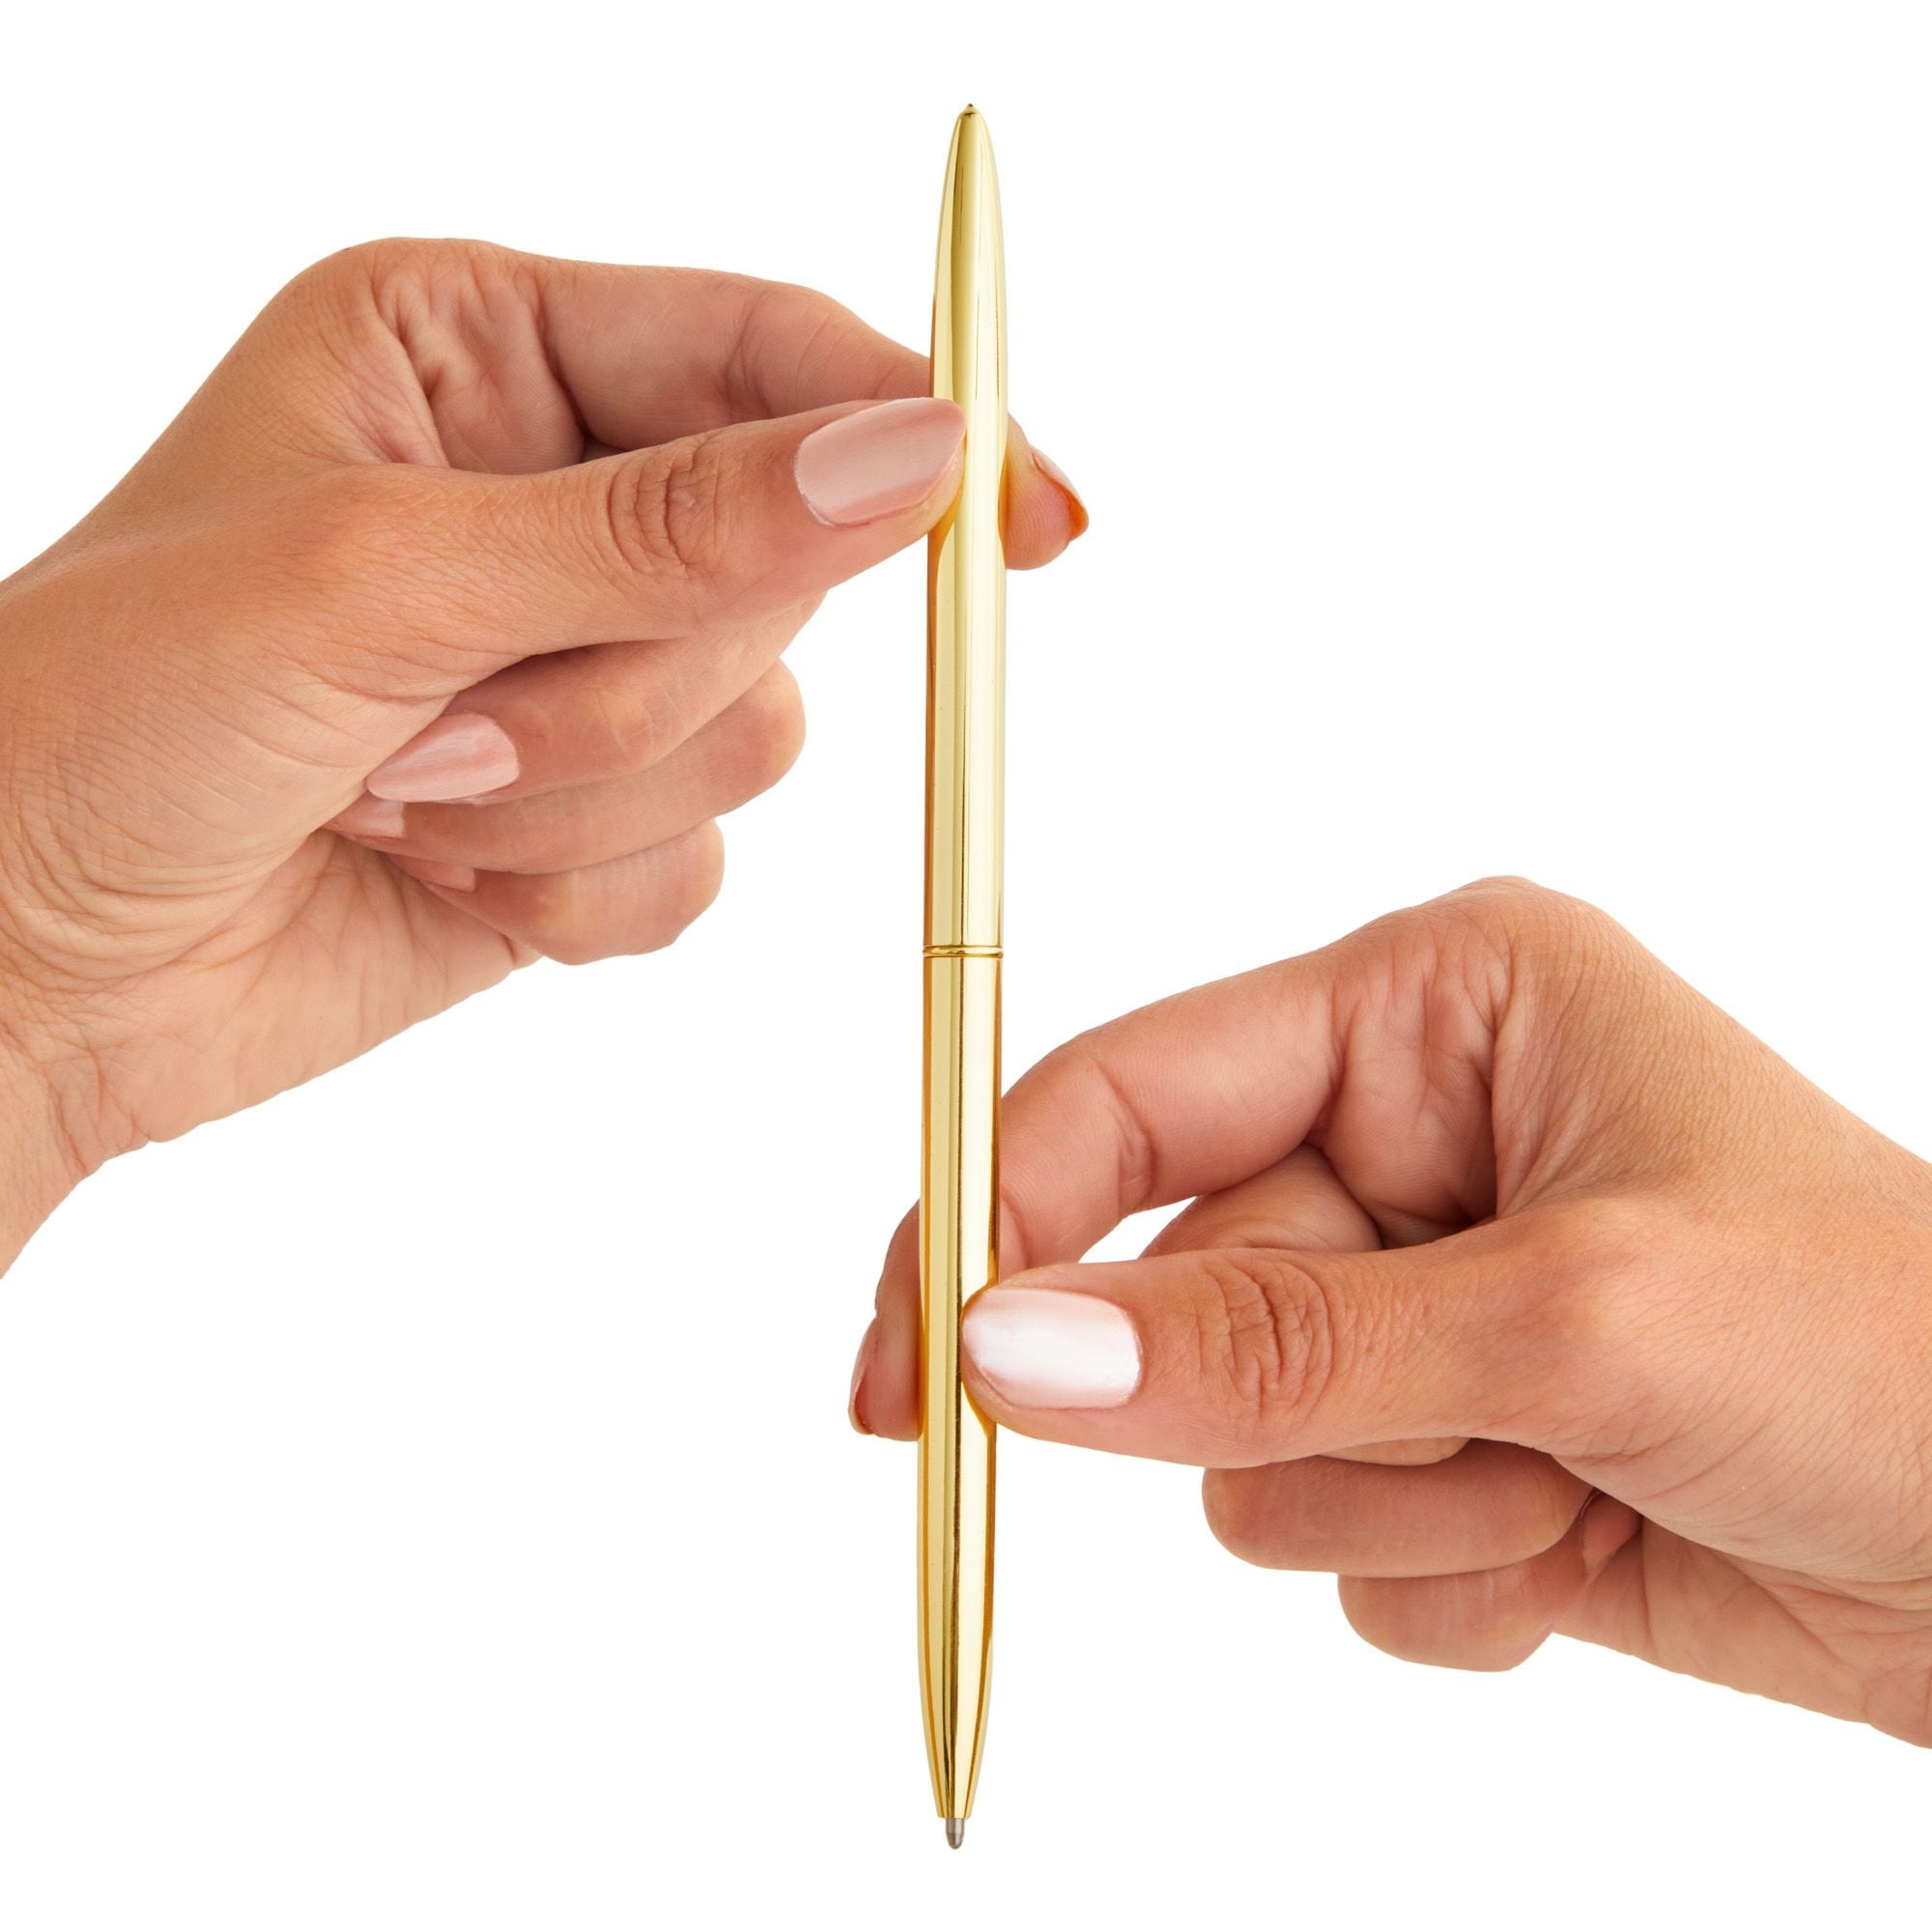 Unibene 12 Pack Ballpoint Pens-Gold, Slim Mentallic Retractable Lightweight Gold Pens Set Nice Gift for Wedding Business Office Students Teachers